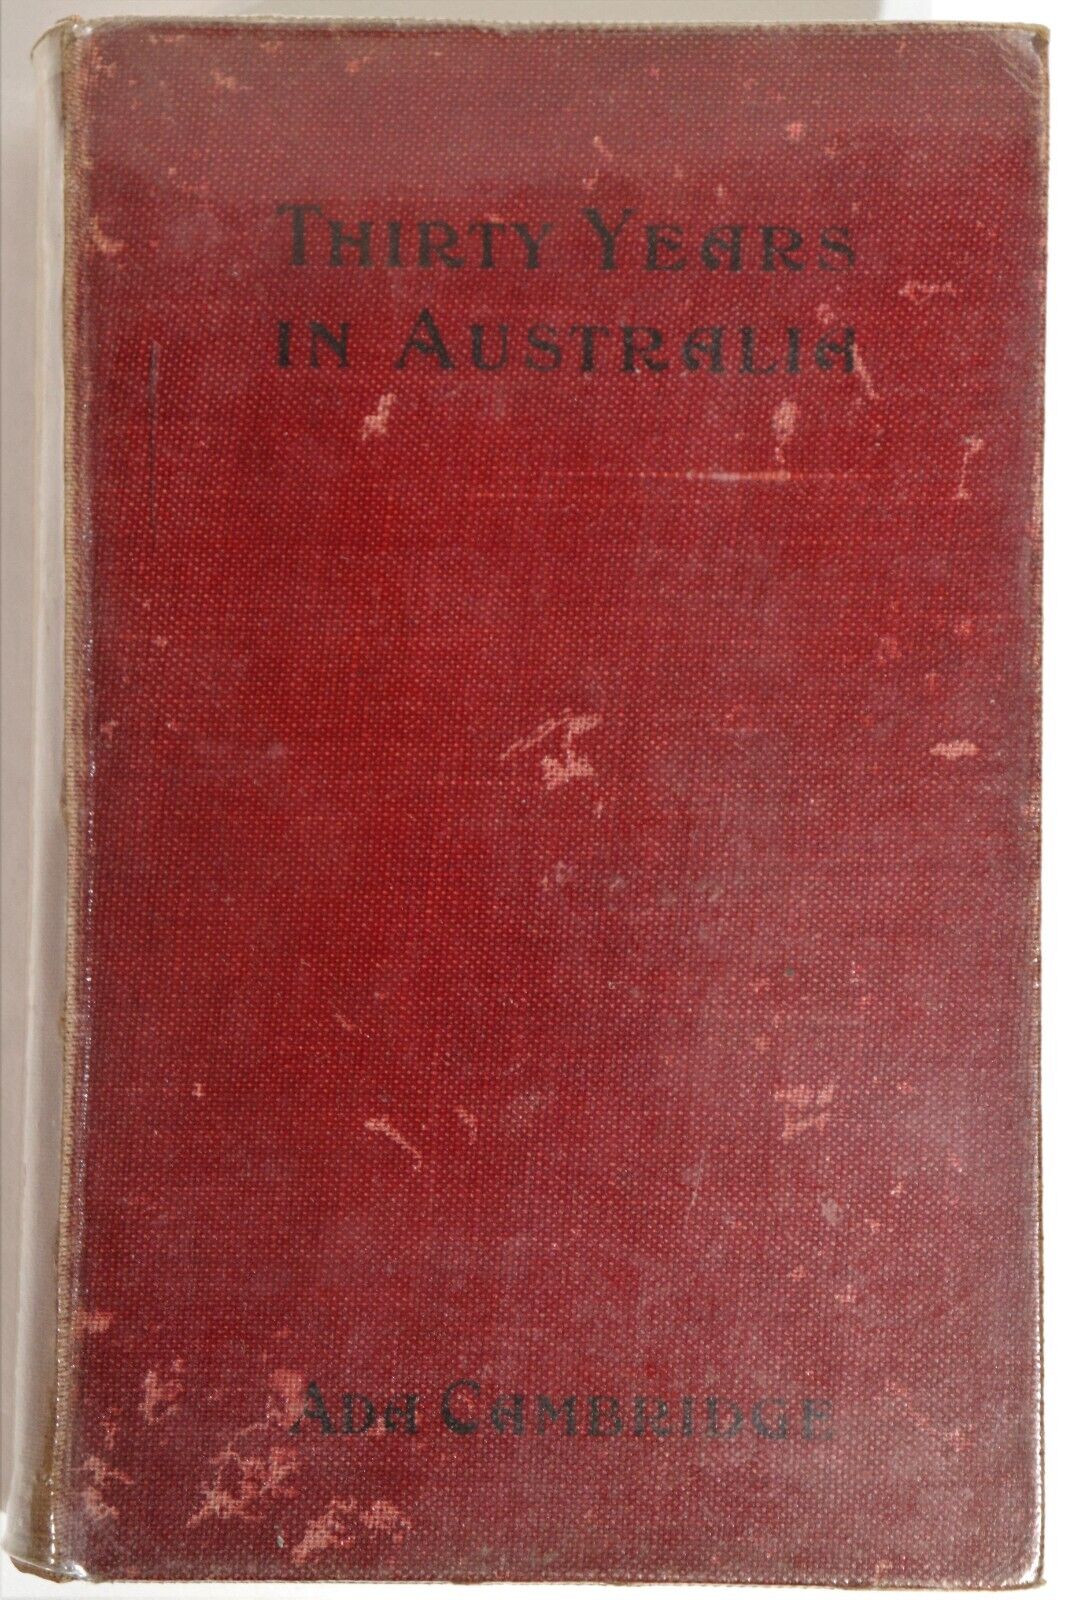 Thirty Years In Australia by Ada Cambridge - 1903 - Australian History Book